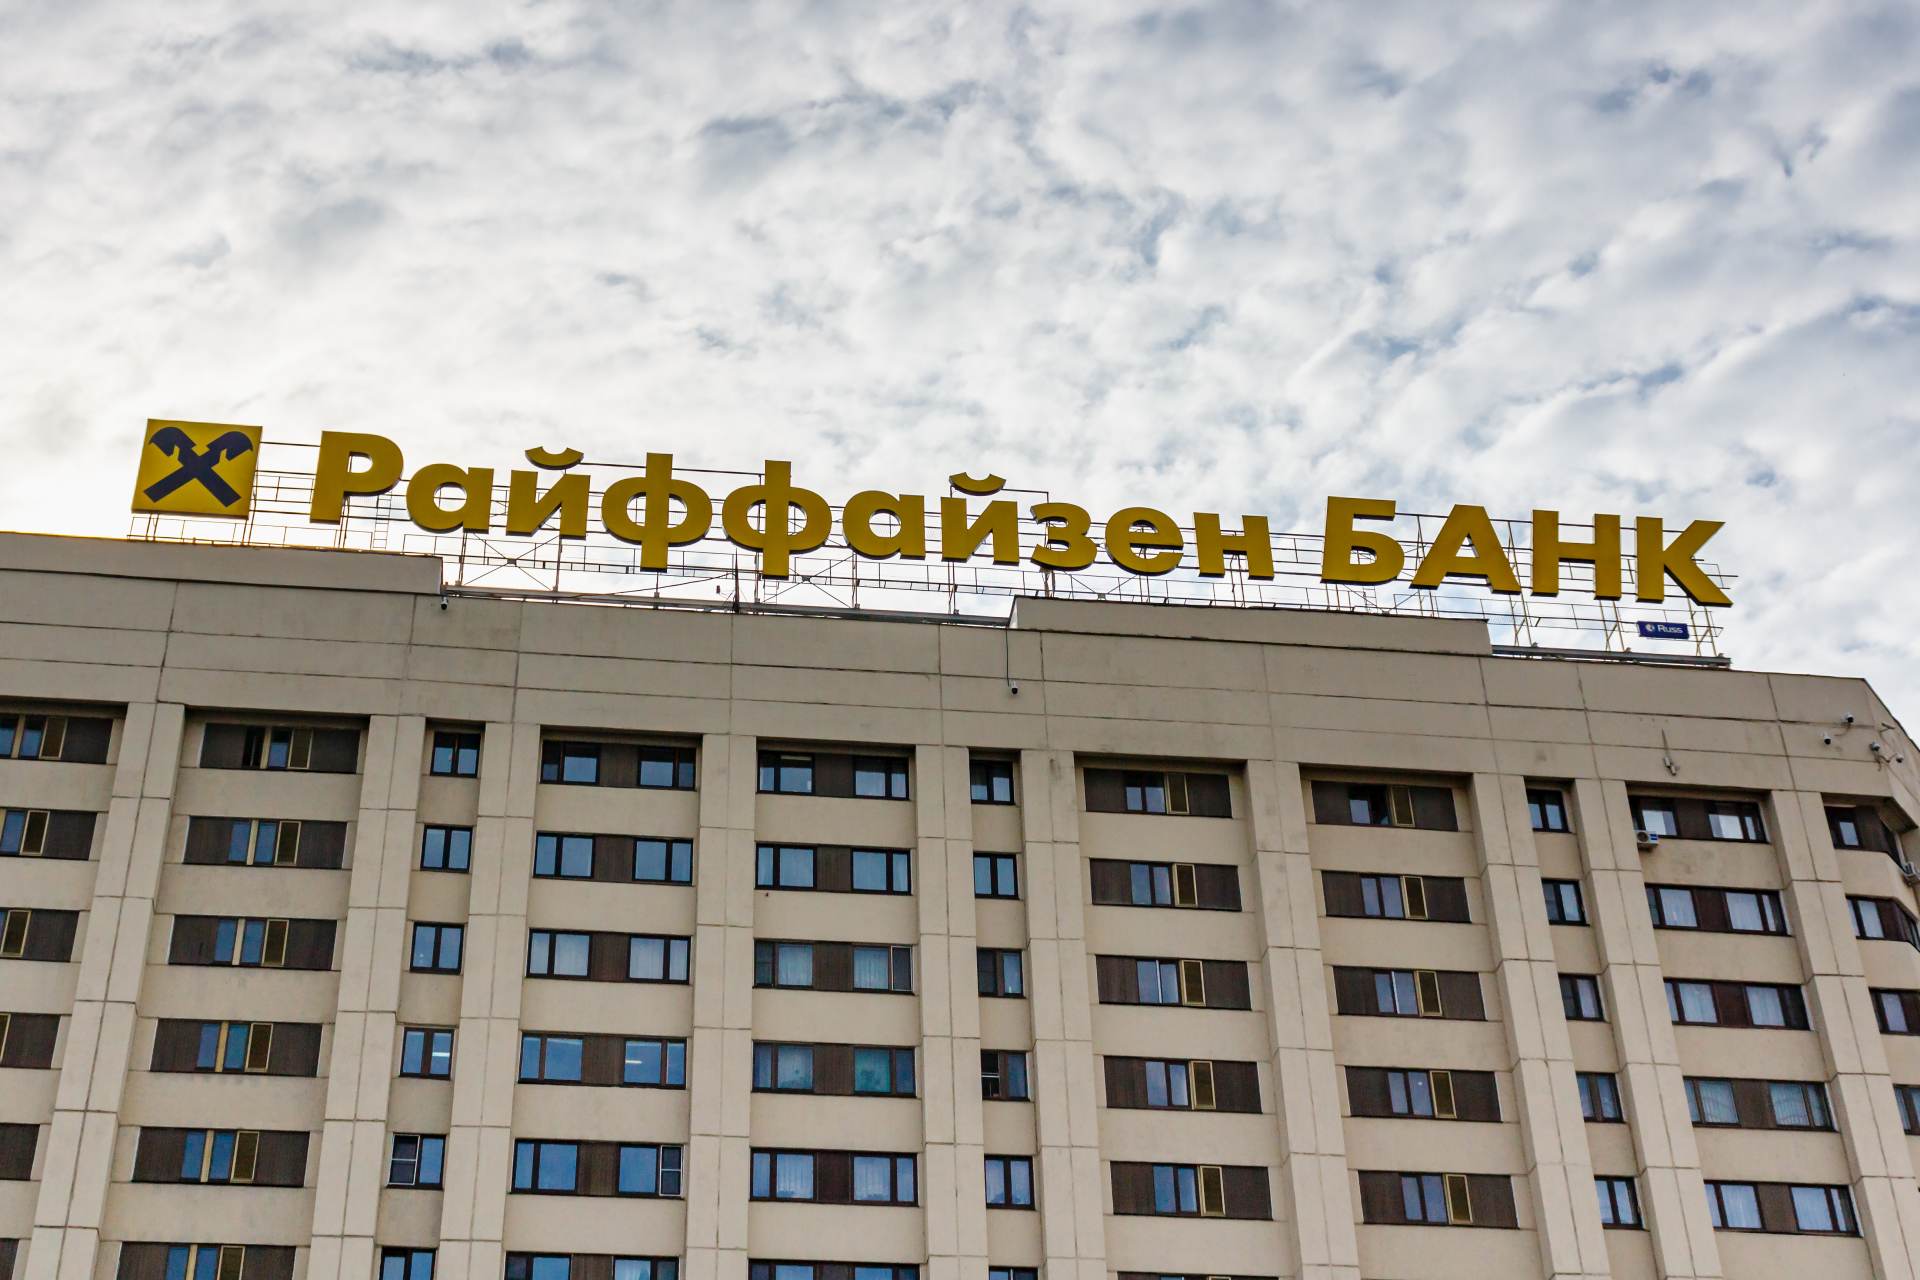  Rusko Rakousko EU banky služby měna firmy Raiffeisenbank 